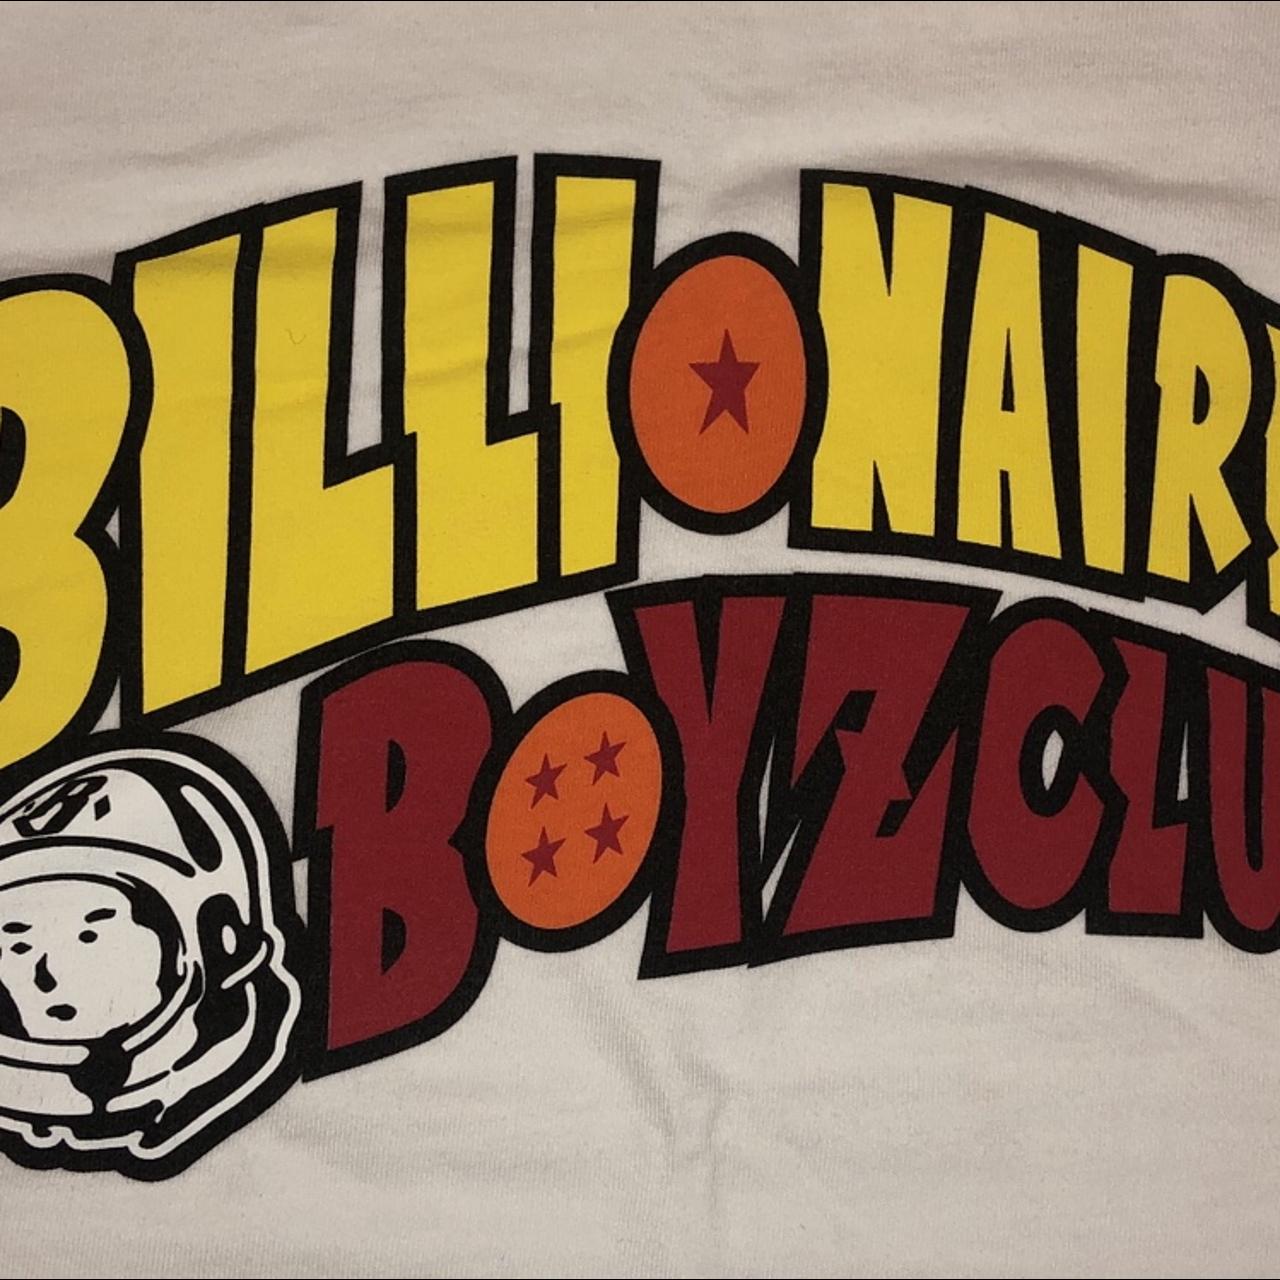 Sick dragon ball z x billionaire boys club T- shirt.